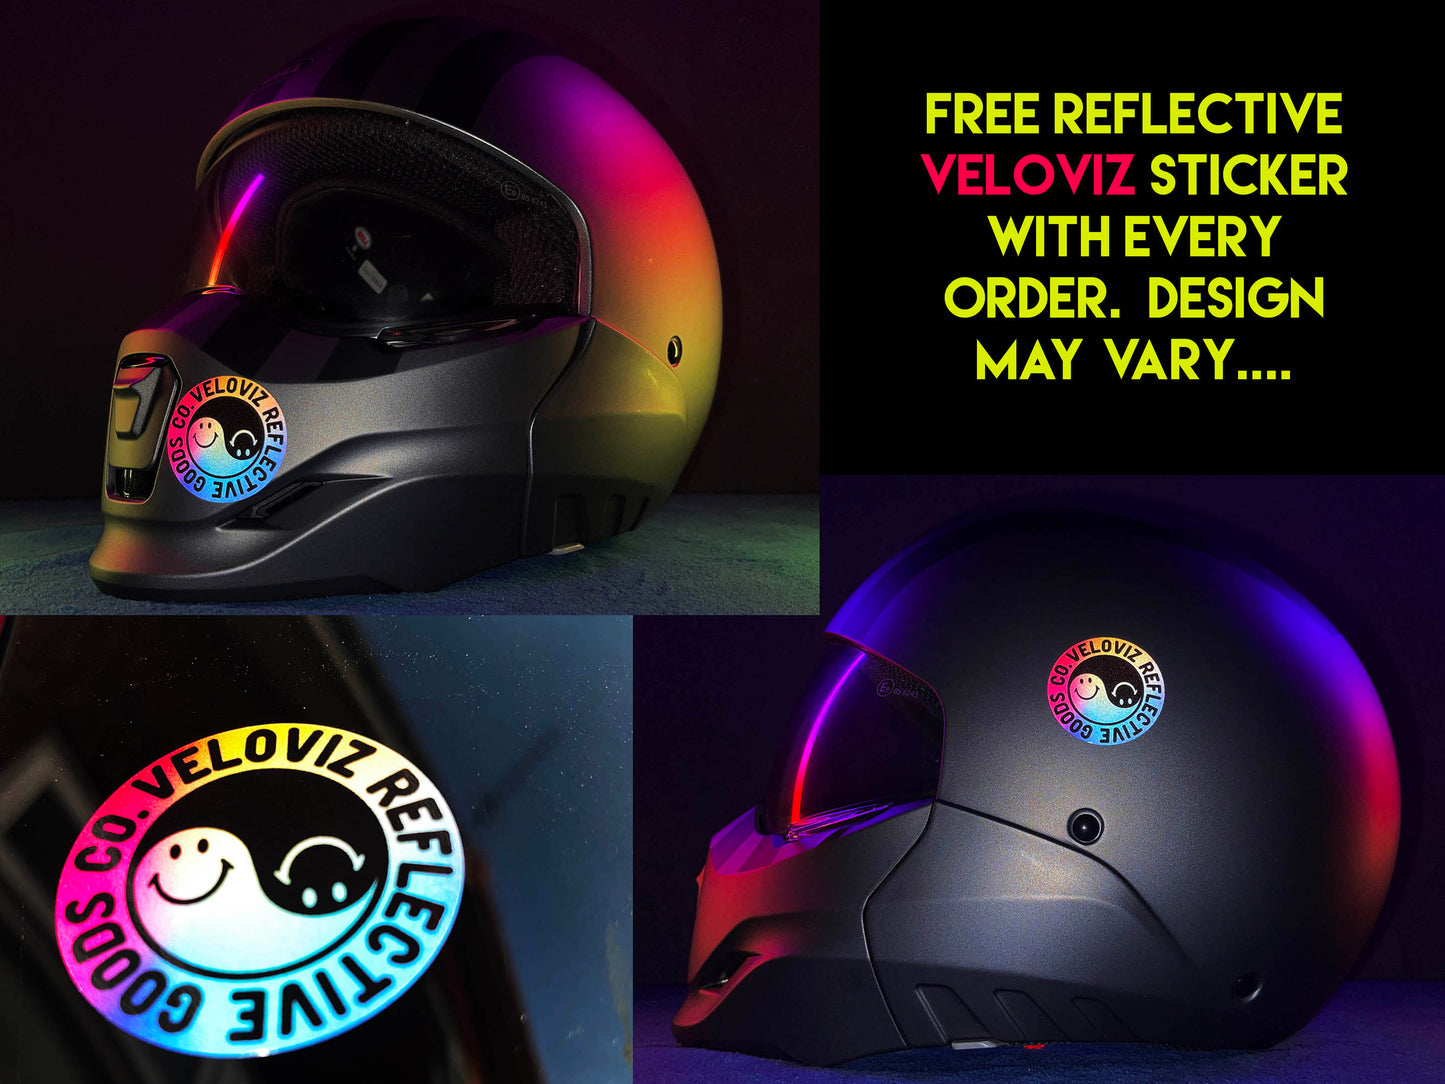 Valueviz Reflective 1 Inch Chevron Helmet Stickers